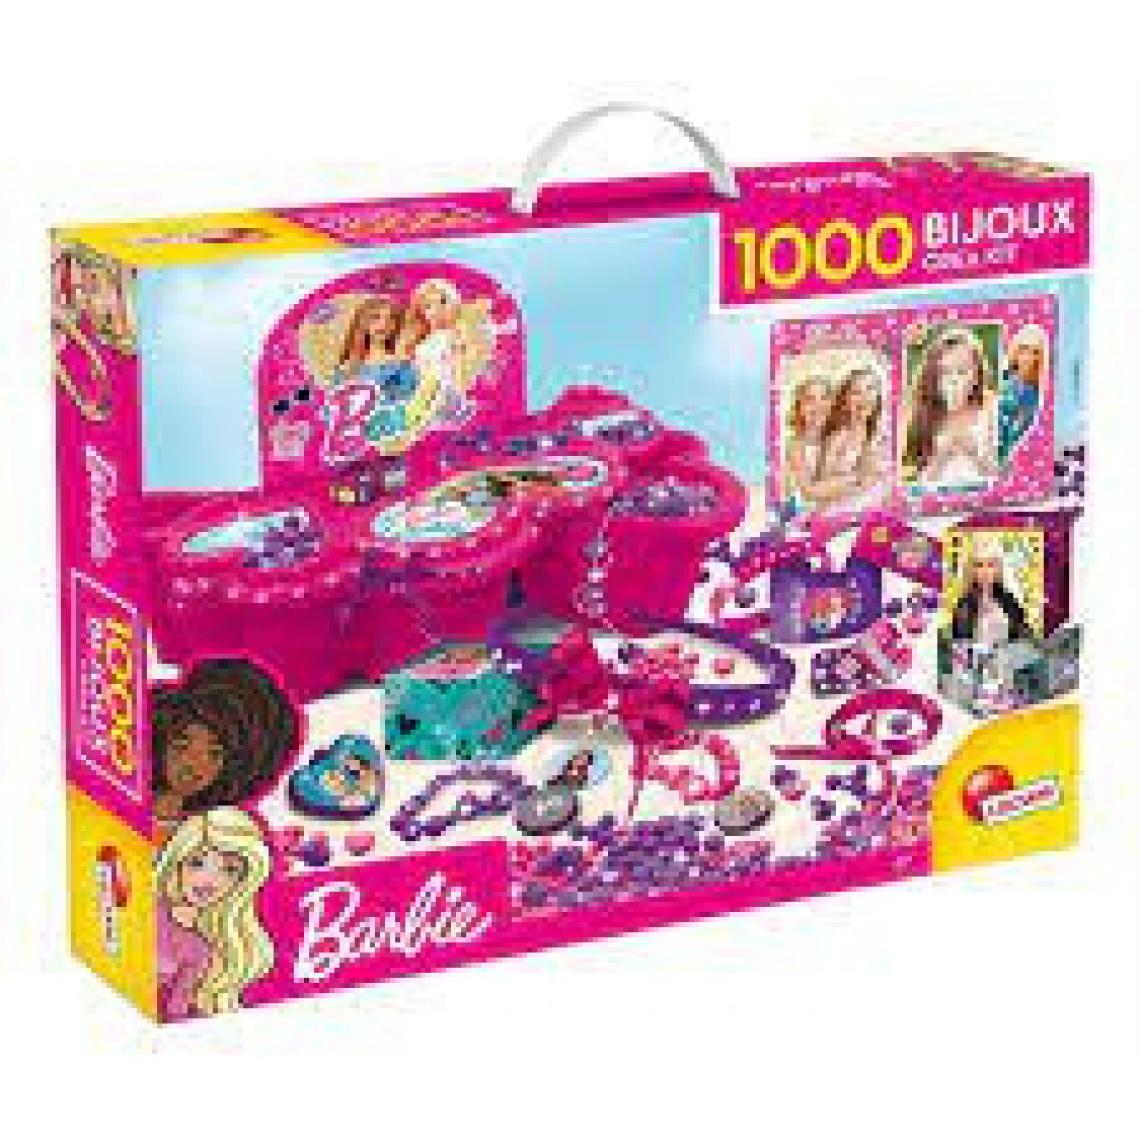 Lisciani Giochi - Lisciani Giochi Barbie 1000 Bijoux - Poupées mannequins